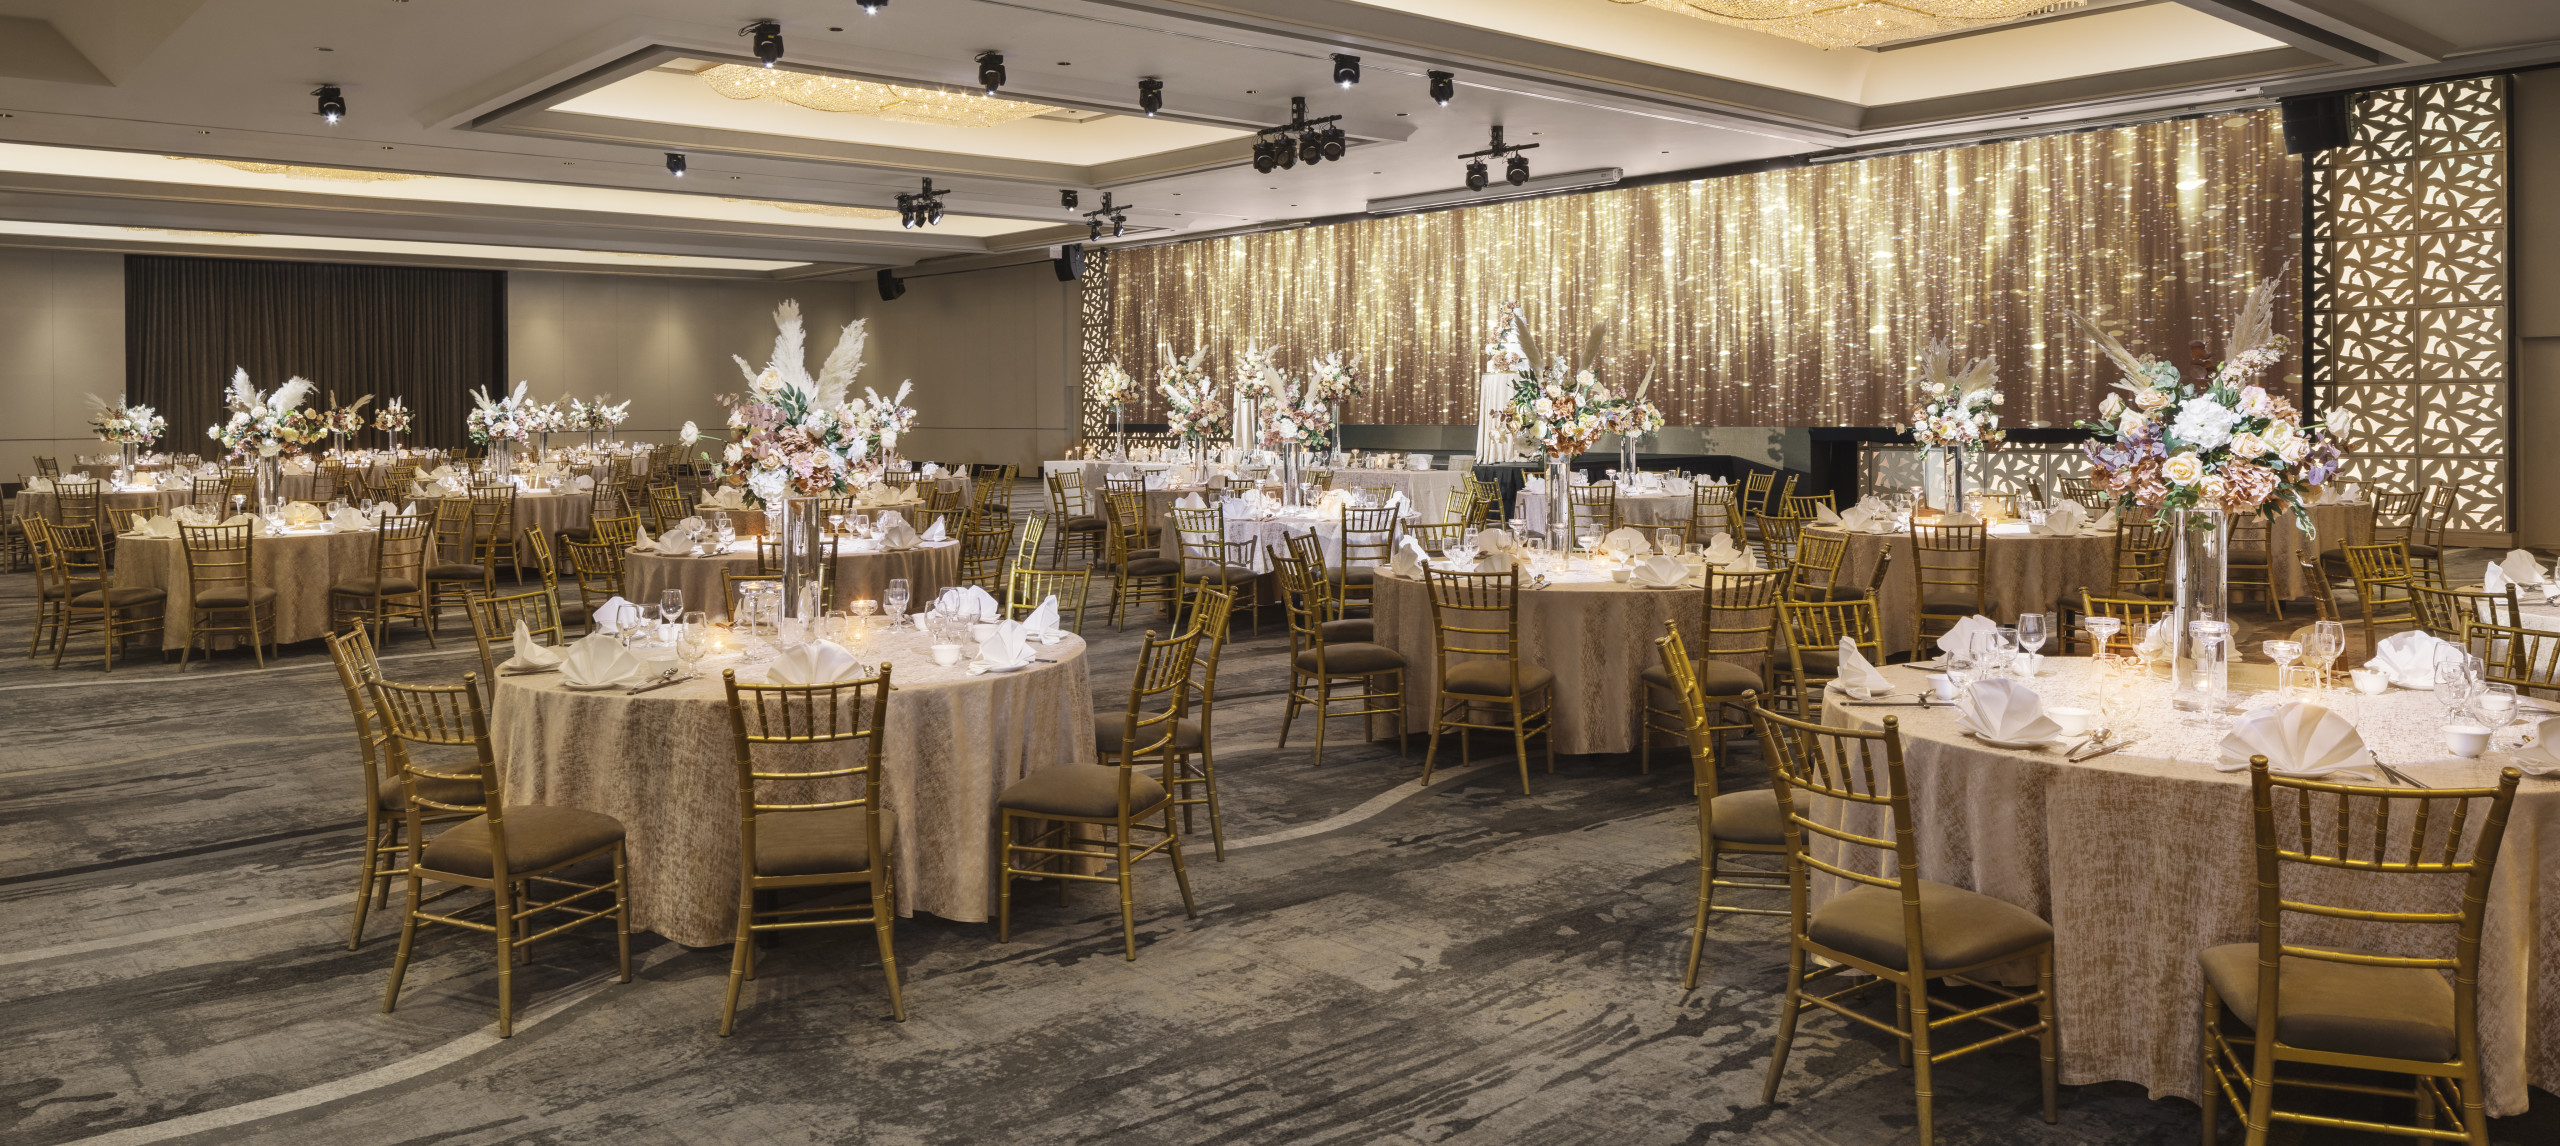 Grand Ballroom set for wedding